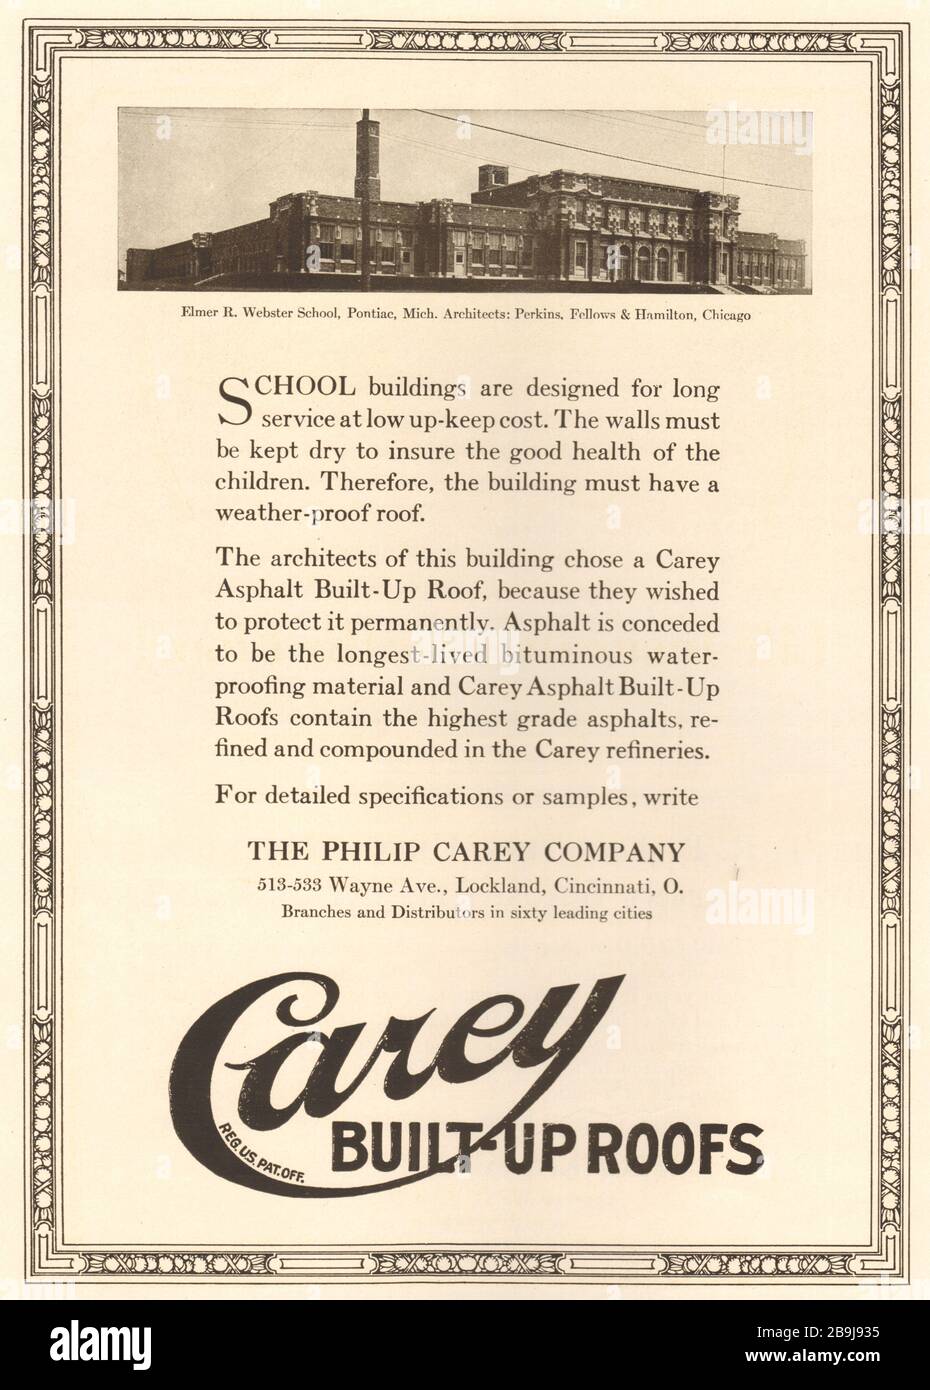 École Elmer R. Webster, Pontiac, Michigan. Architectes : Perkins Fellows Hamilton, Chicago. Philip Carey Co. 513 Wayne Ave, Lockland, Cincinnati (1922) Banque D'Images